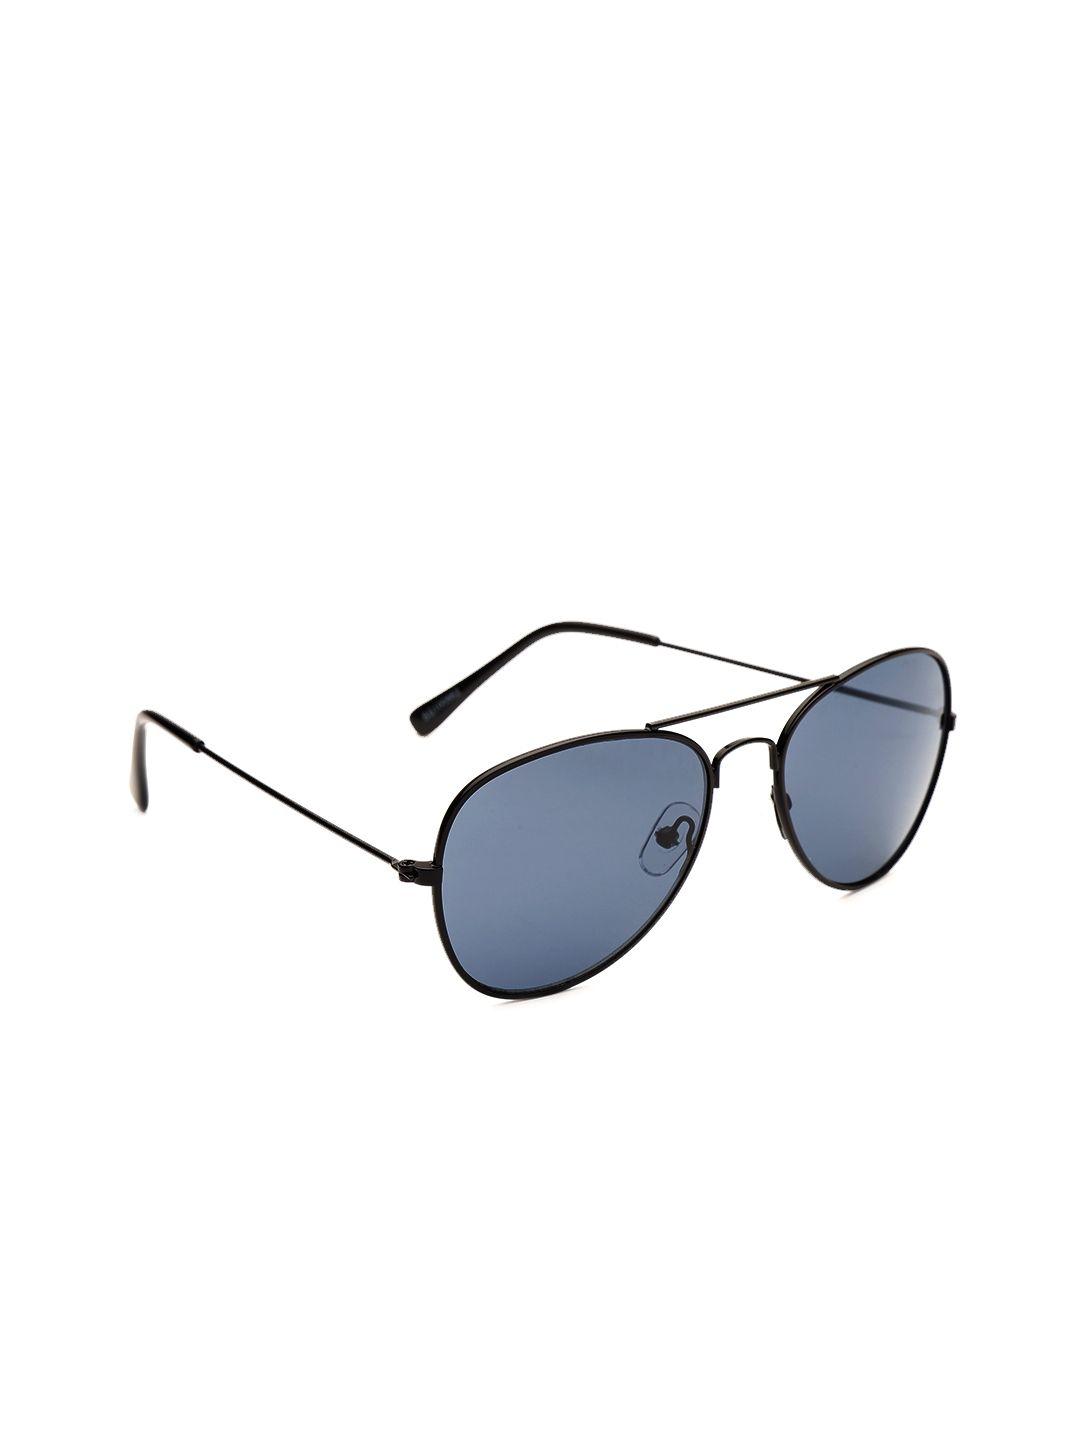 carlton london boys blue lens & black aviator sunglasses with uv protected lens